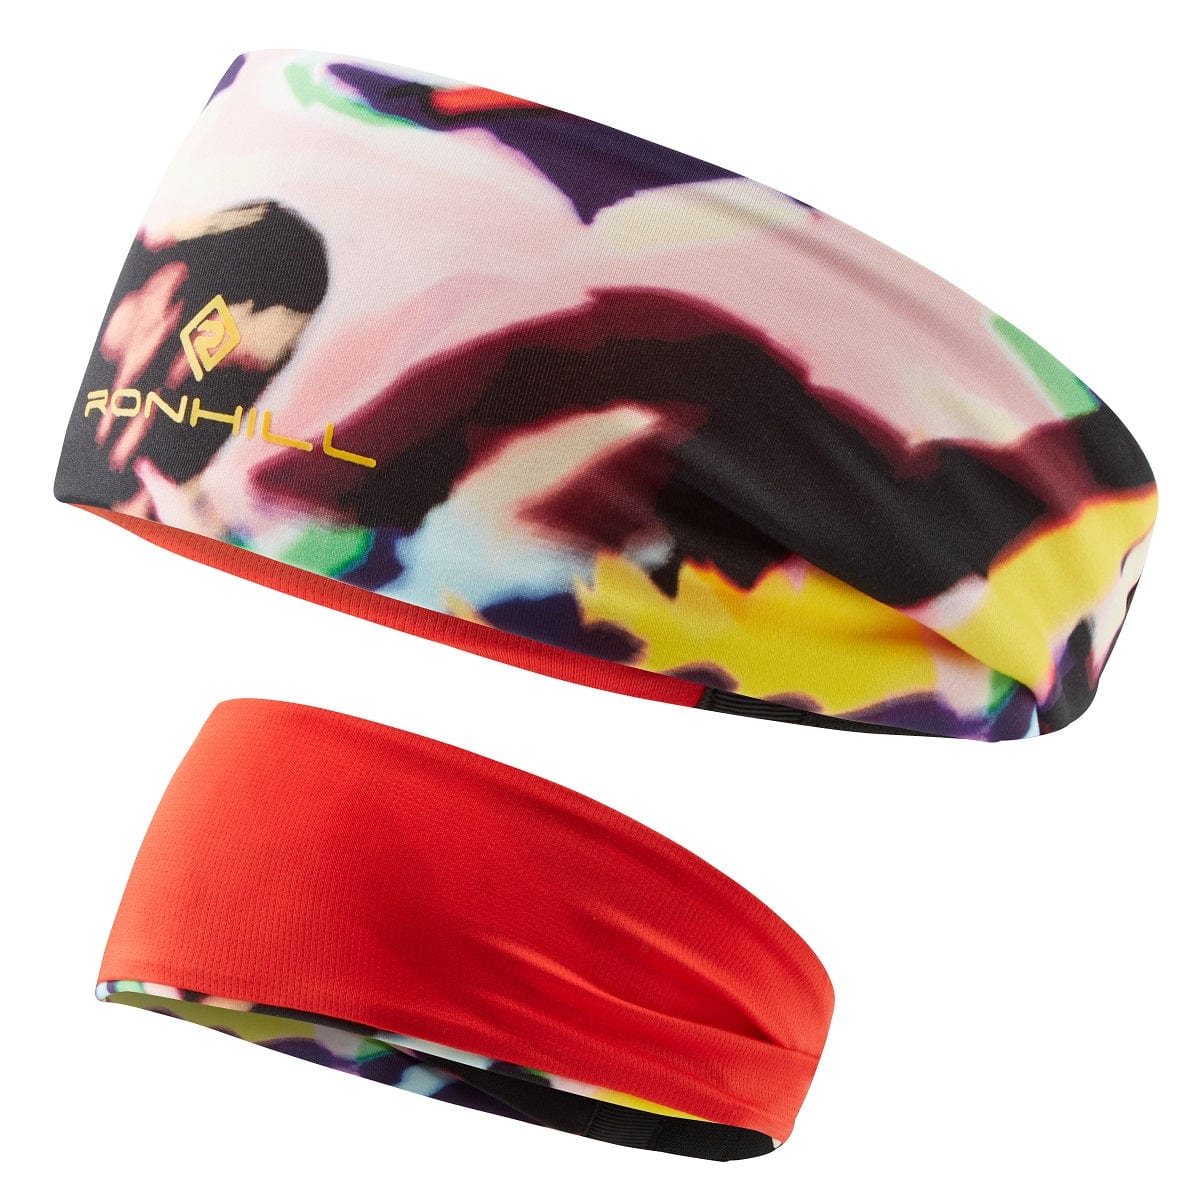 Ronhill Headwear S/M / Graffiti/Flame Reversible Contour Headband XMiles